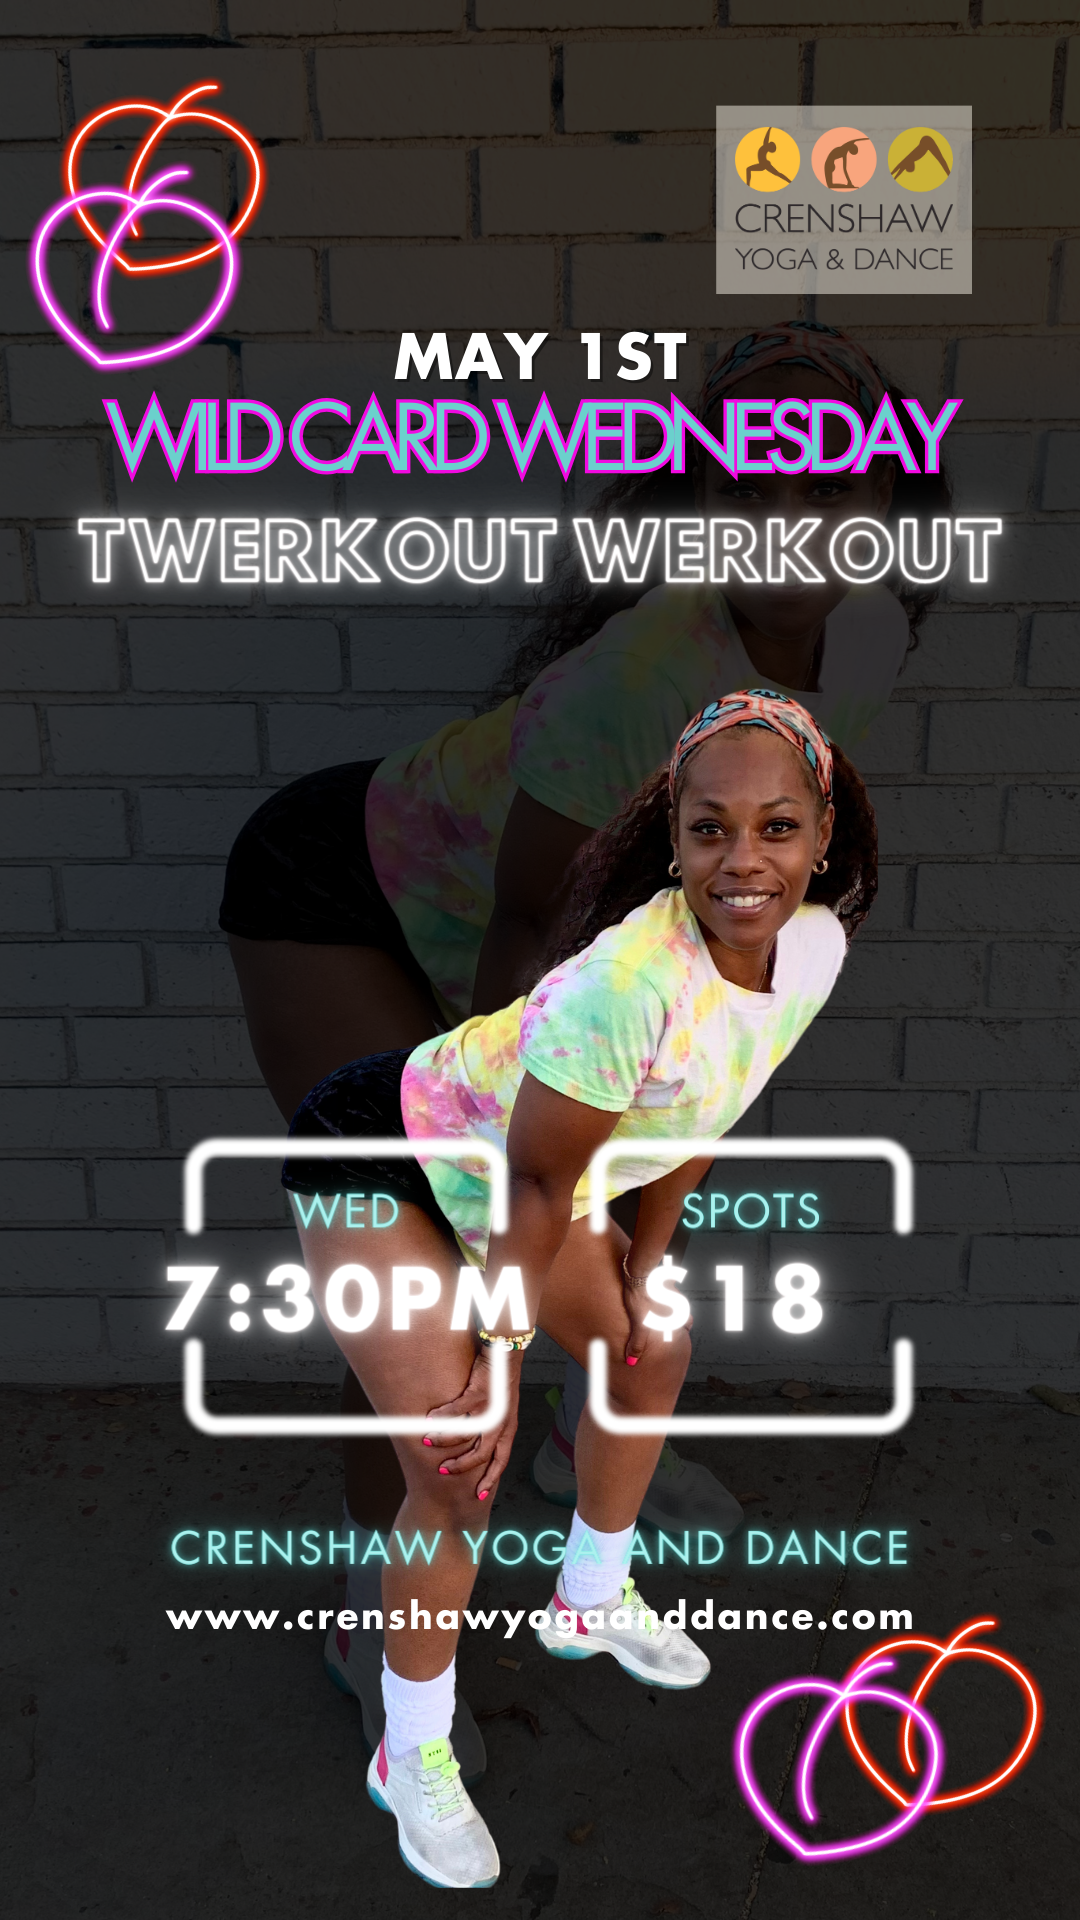 Come Twerk with Velvet Wednesday, May 1st 7:30pm.